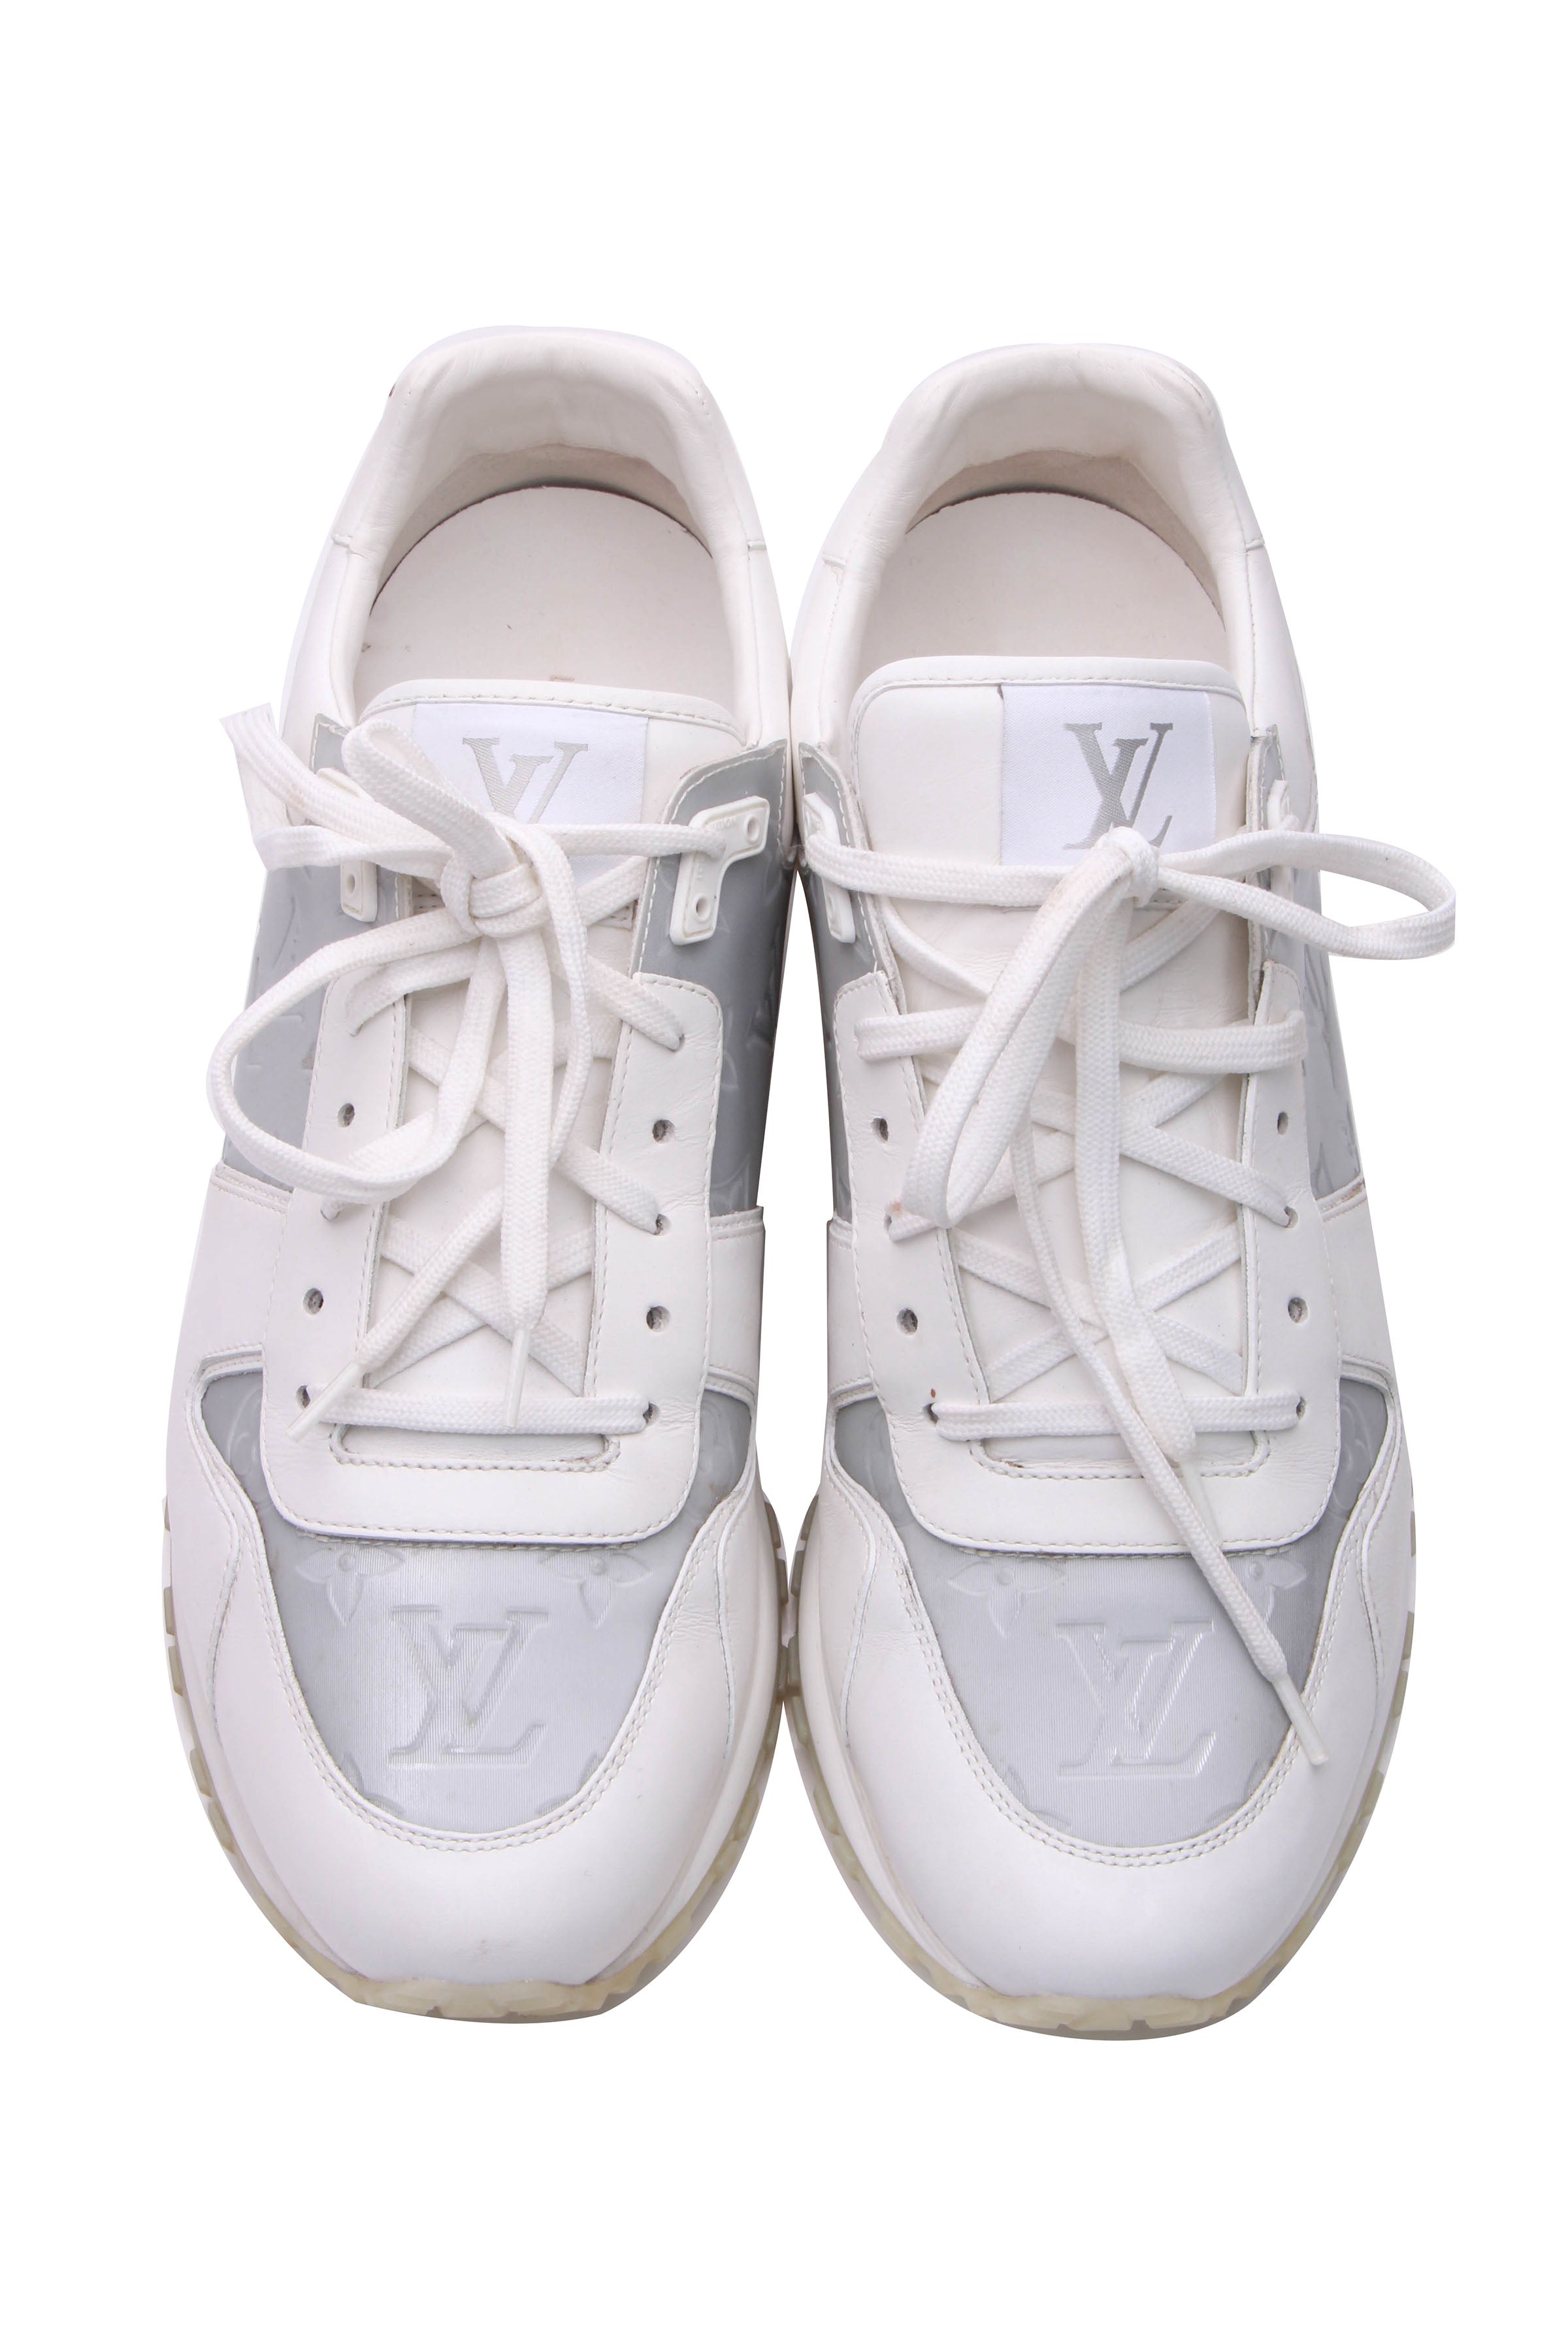 Gorgeous Men's Louis Vuitton run away sneakers 8.5 BRAND NEW IN